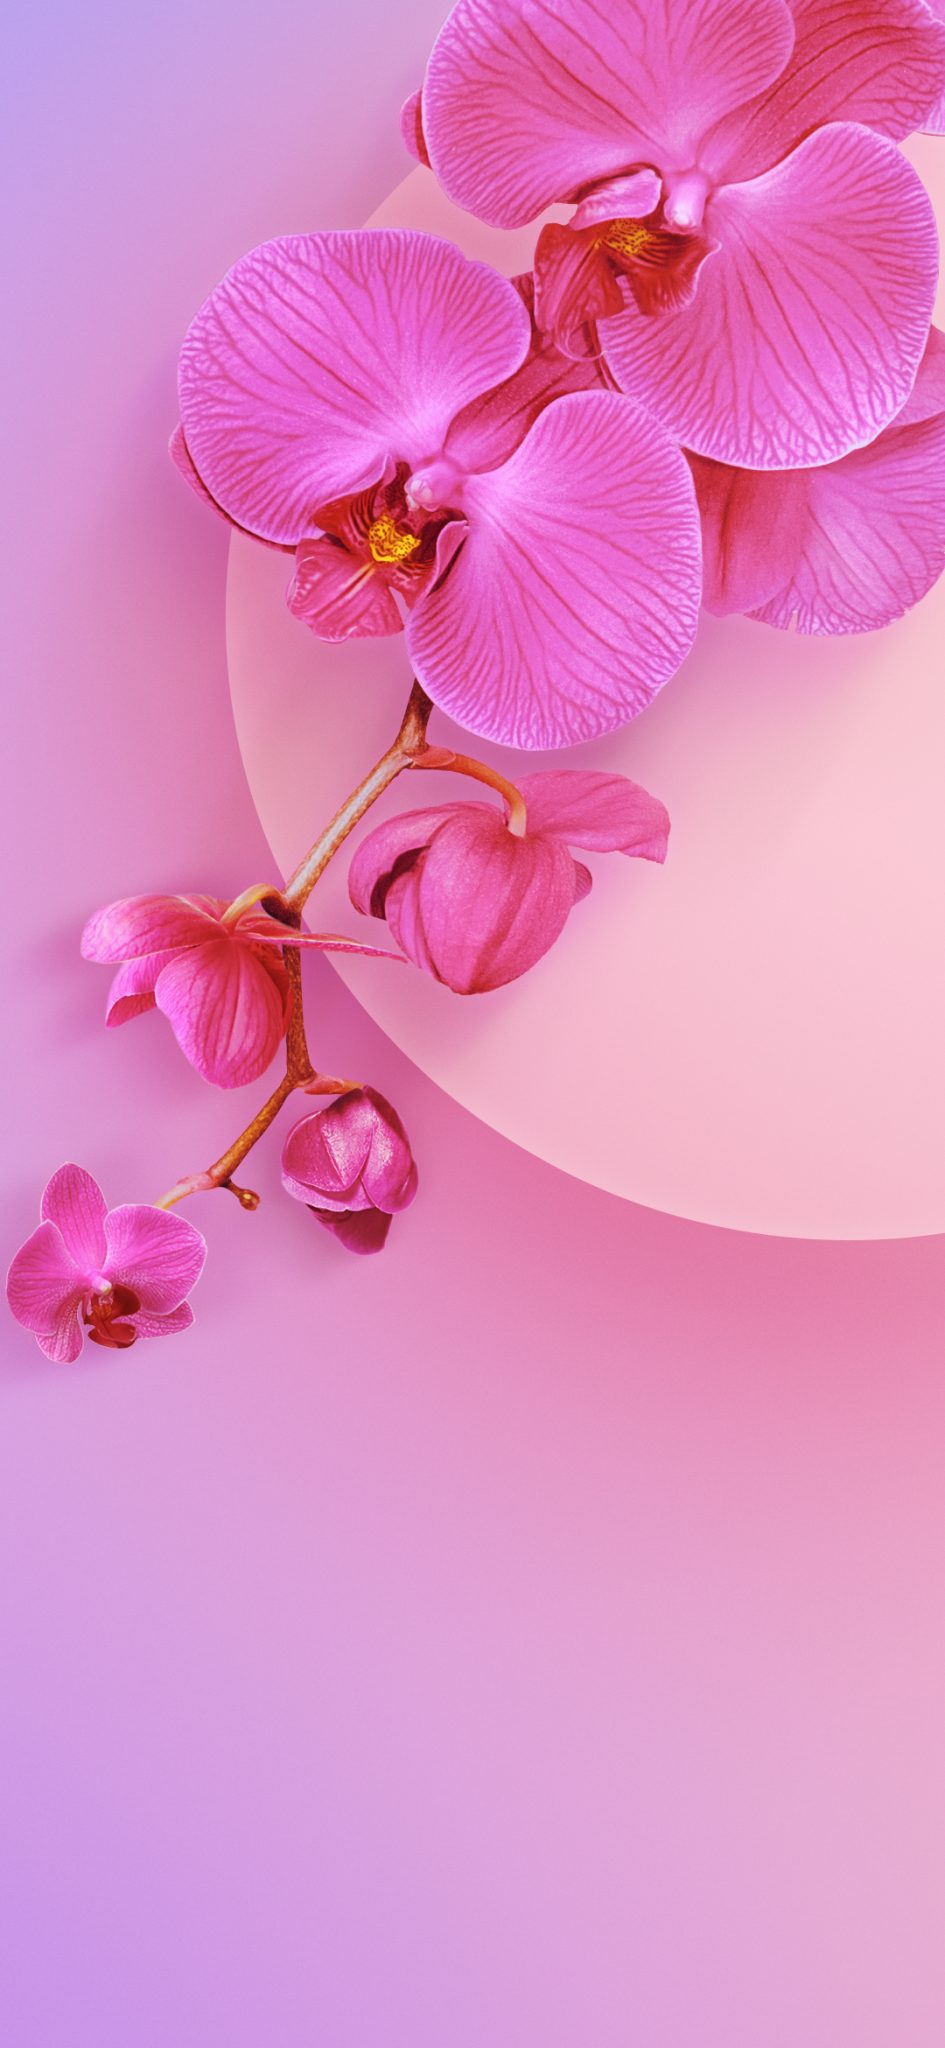 redmi-k20-pro-pinkflower-wall-TechFoogle